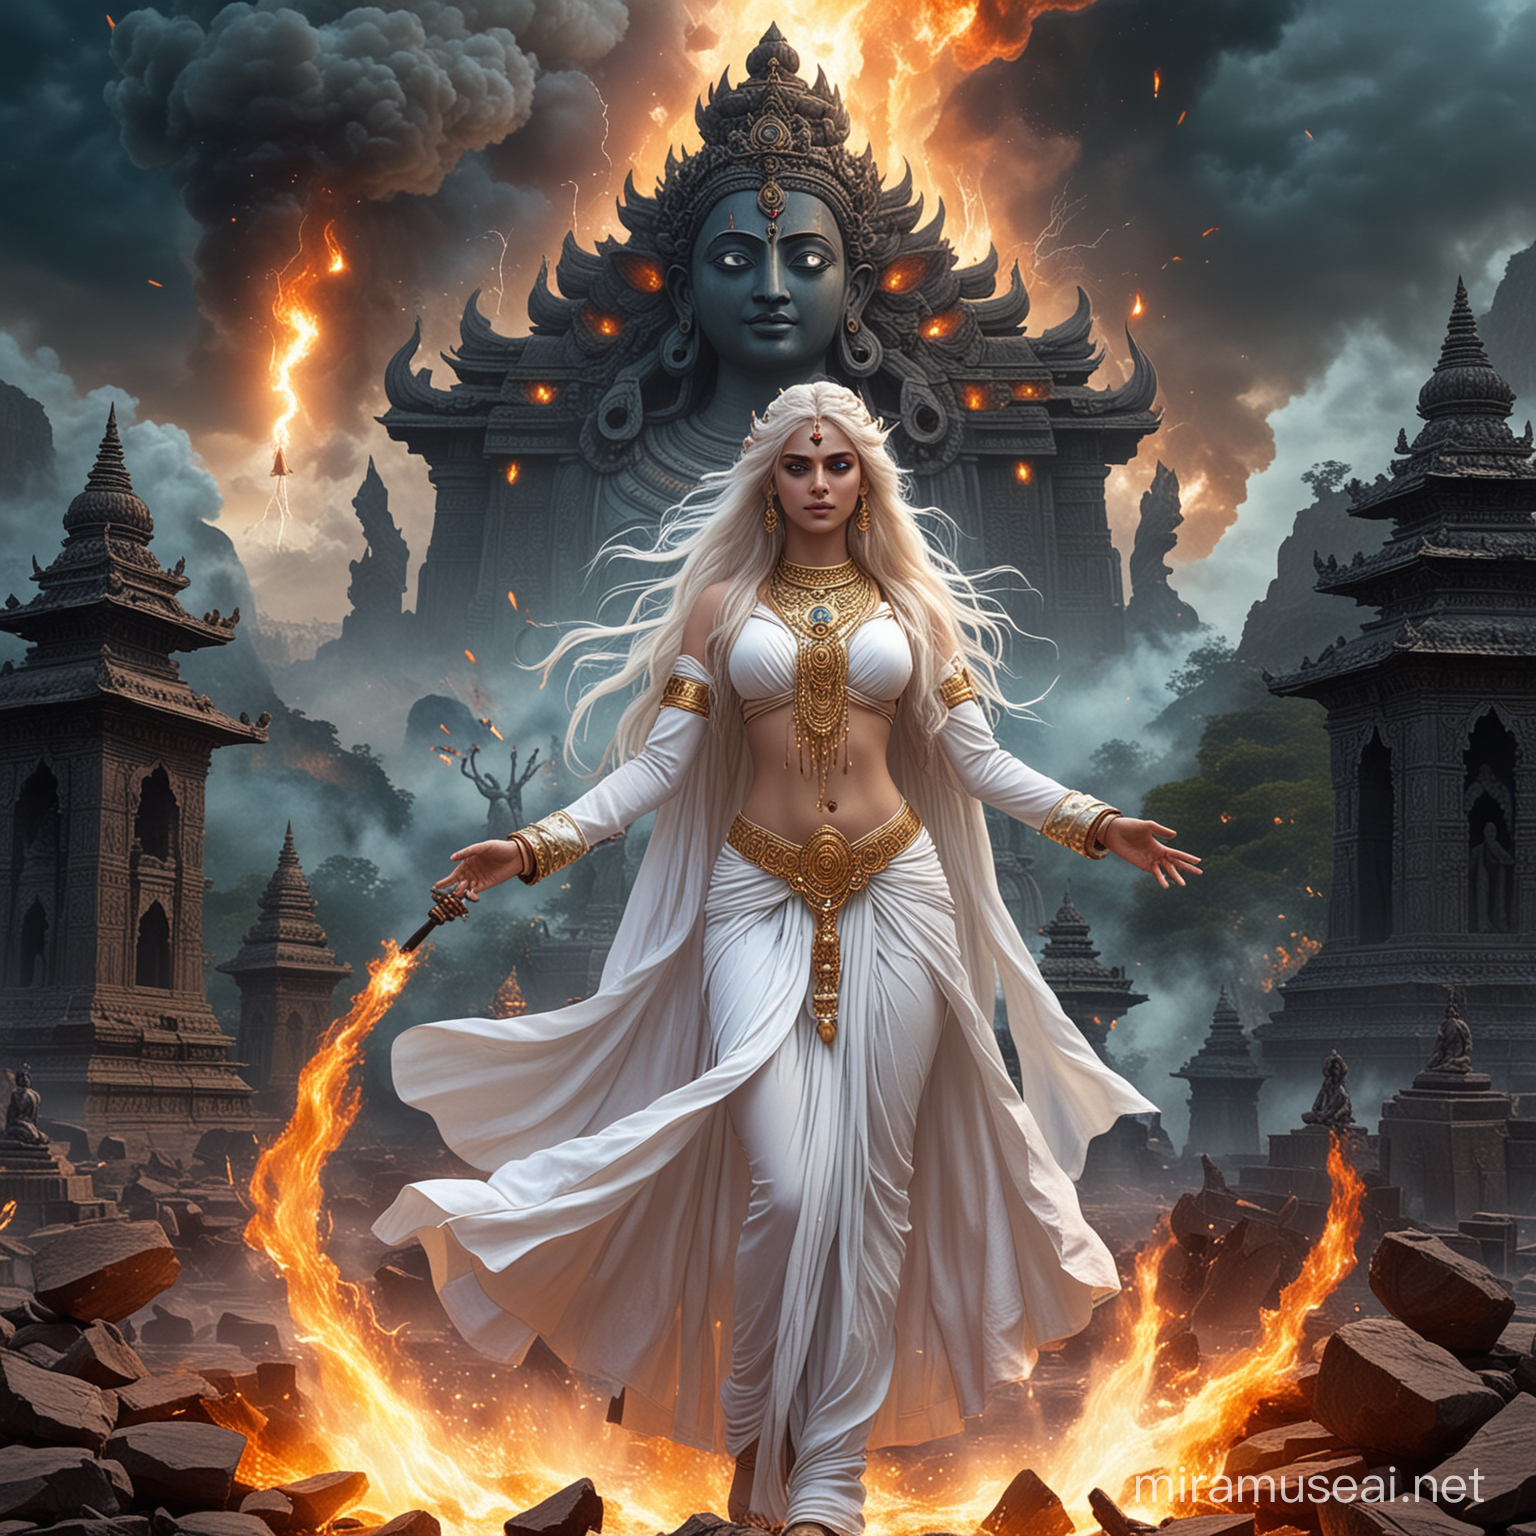 Powerful Hindu Empress Goddess in Mystical Combat Amidst Cosmic Energy and Destruction